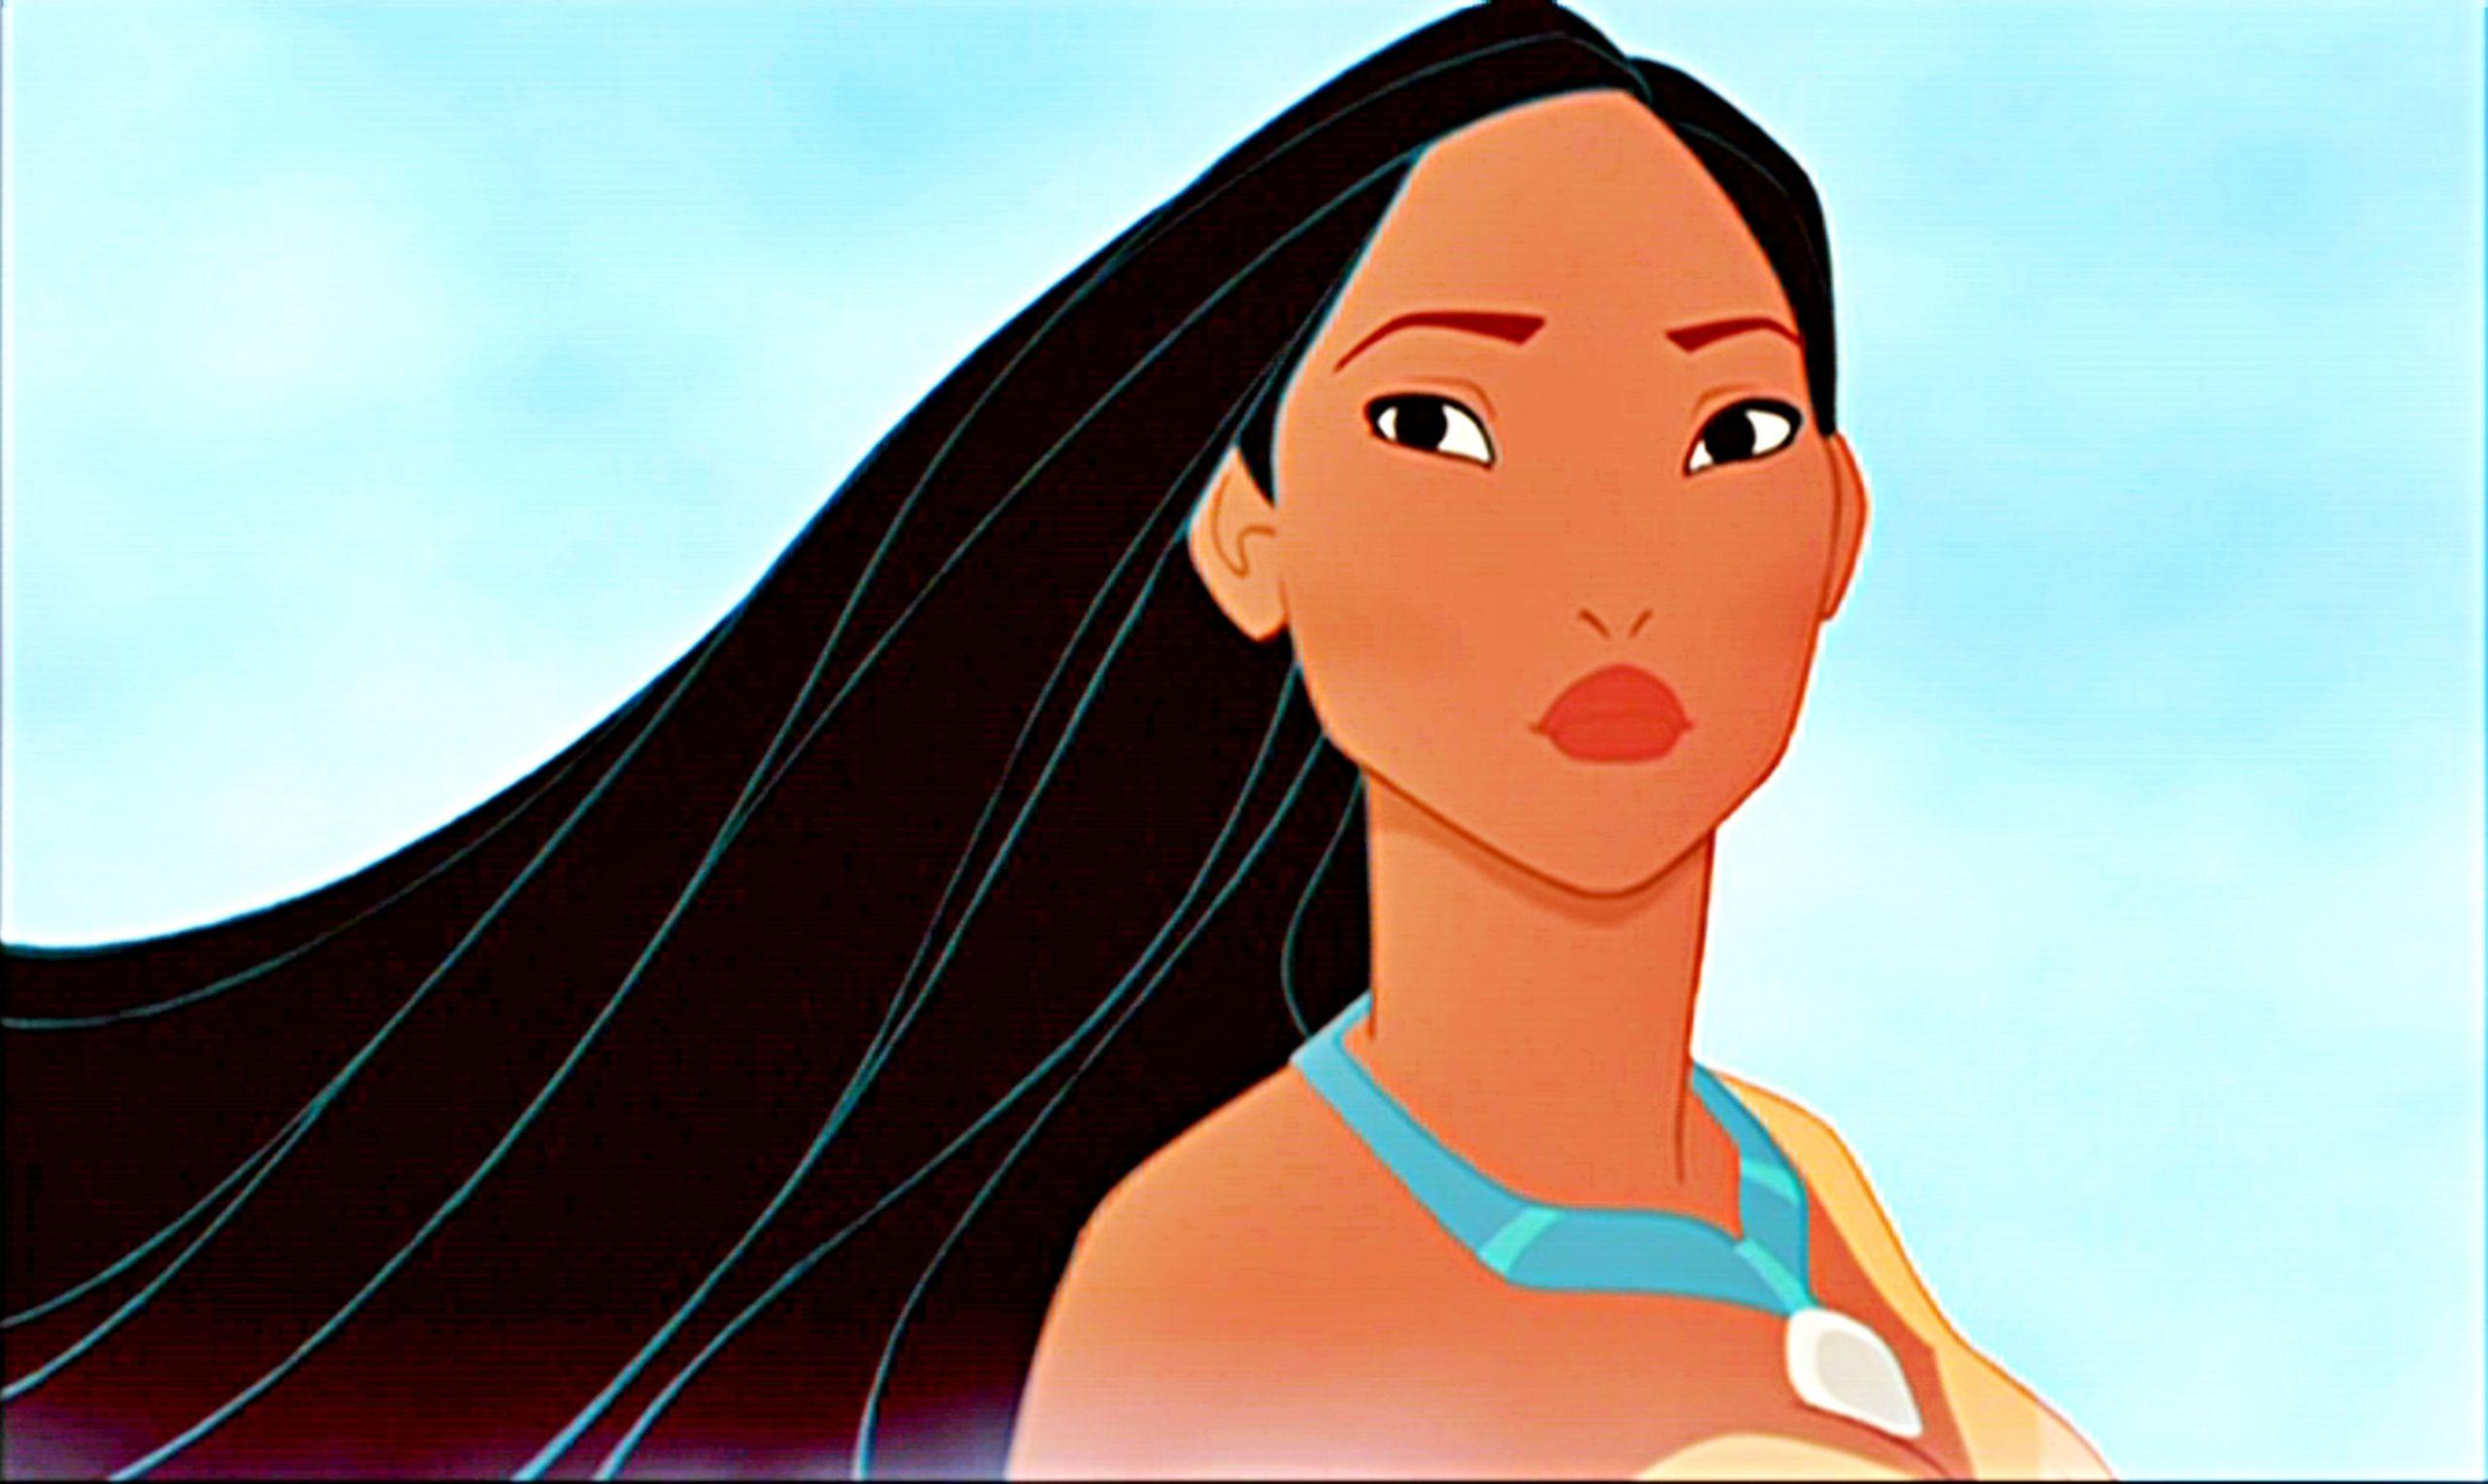 Disney Princess Pocahontas Cartoon HD Wallpaper Image for Nexus 6